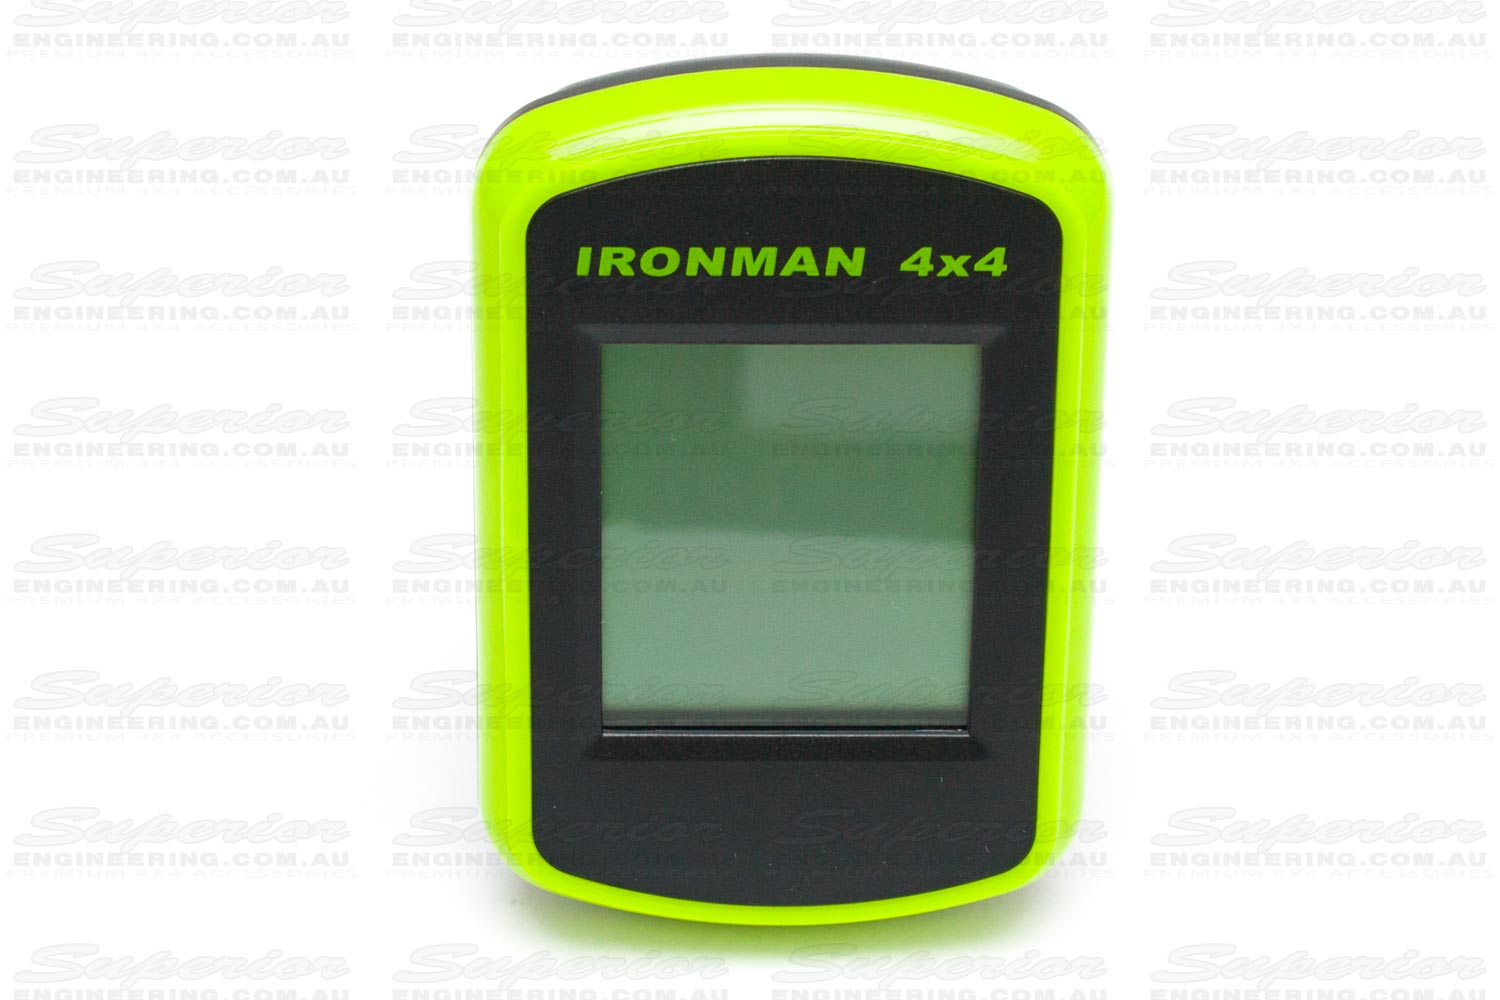 Ironman 4x4 Wireless Fridge Thermometer - Front View